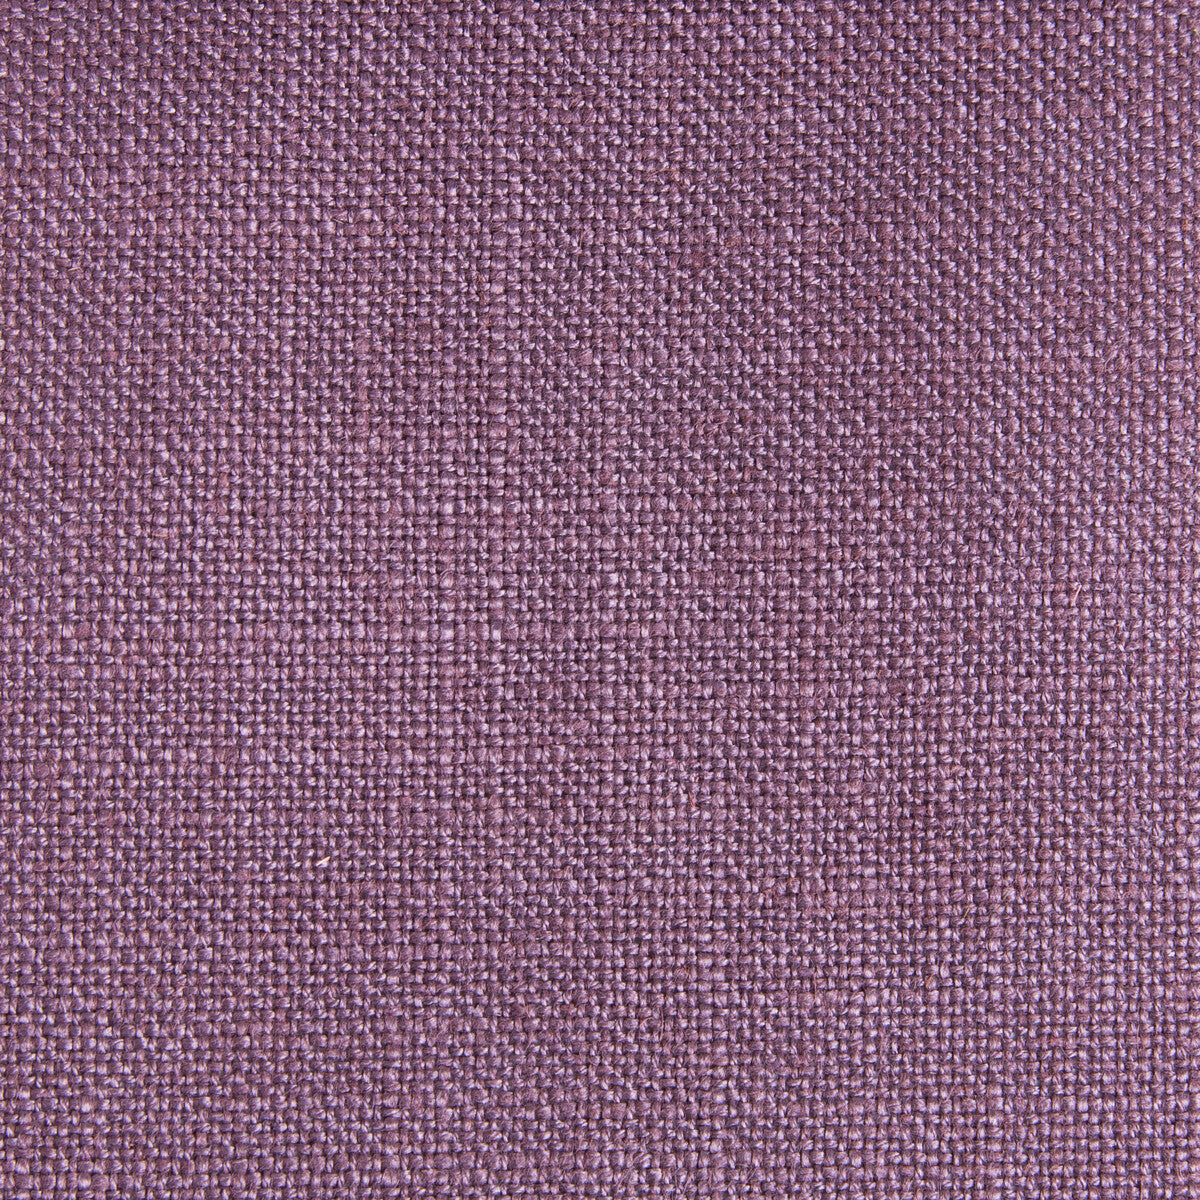 Peru fabric in lavanda color - pattern GDT5548.028.0 - by Gaston y Daniela in the Gaston Nuevo Mundo collection